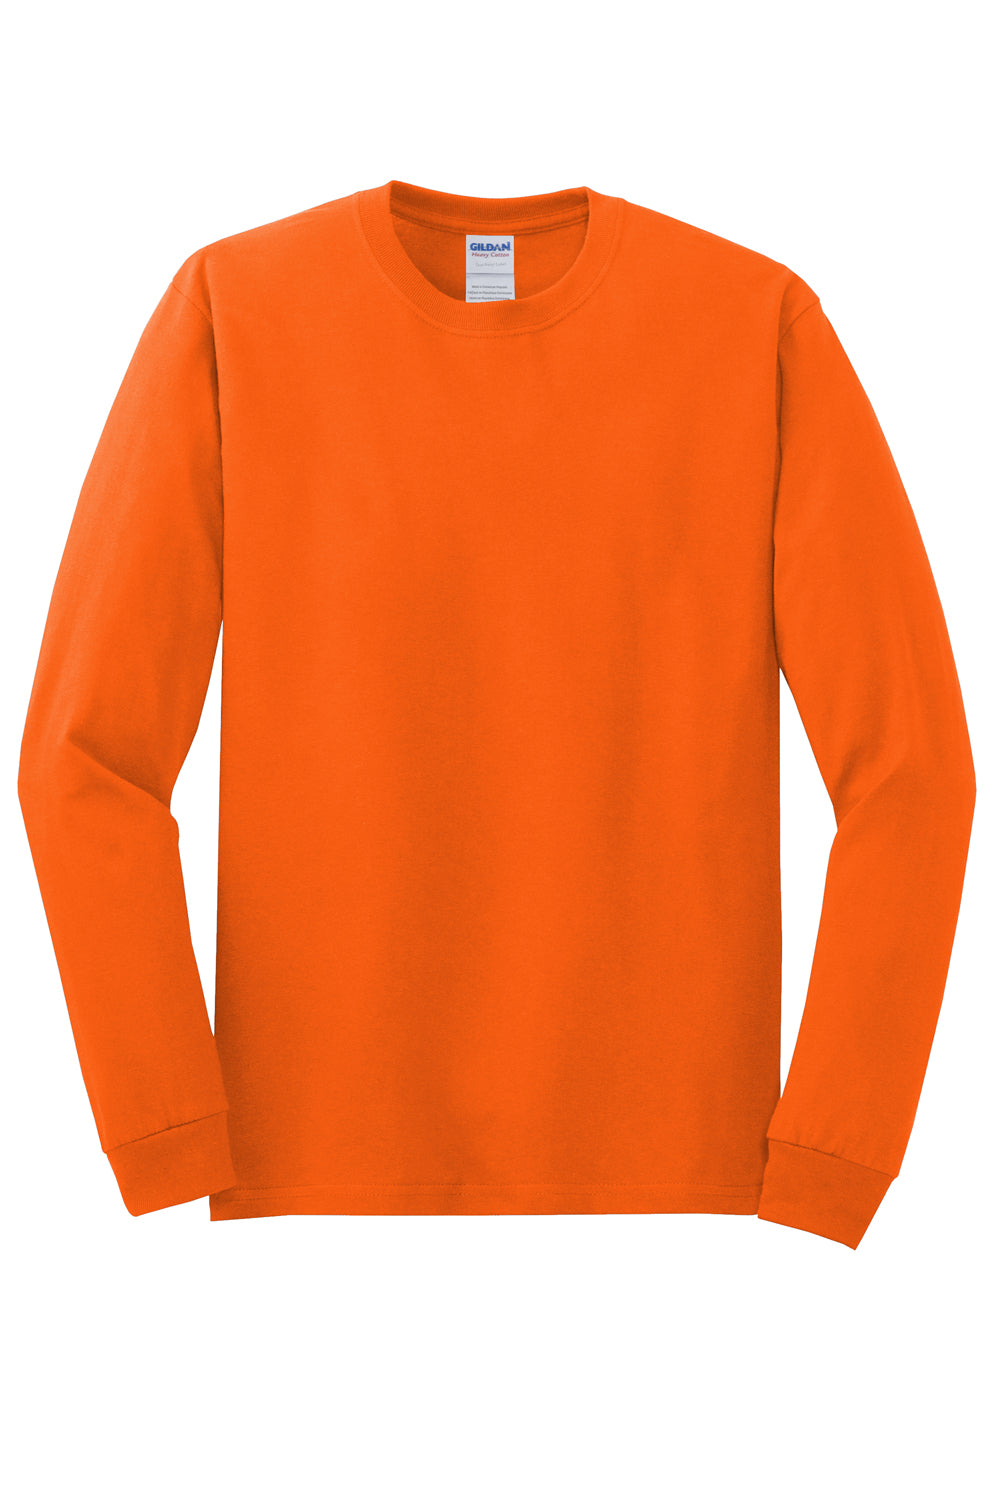 Gildan Mens Long Sleeve Crewneck T-Shirt Orange Flat Front